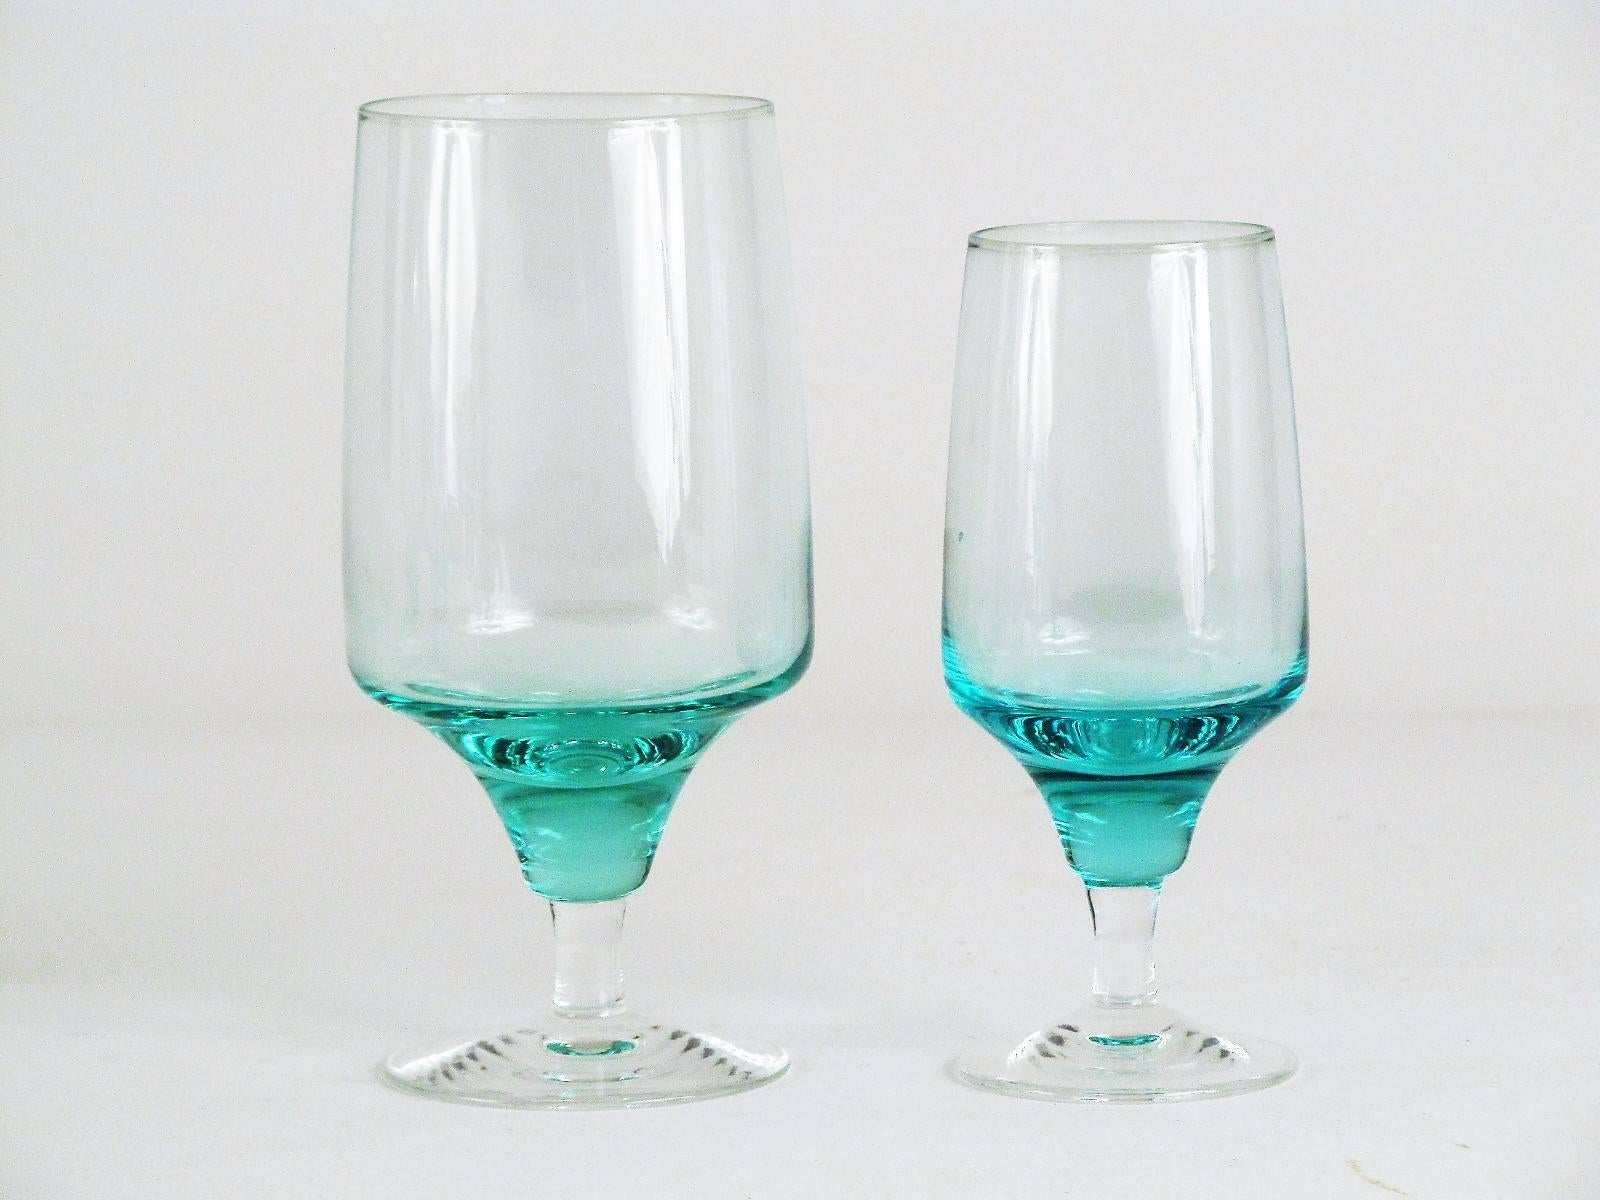 Japanese 57-Piece Complete Set of Sasaki Aqua Harmony Cocktail Glassware